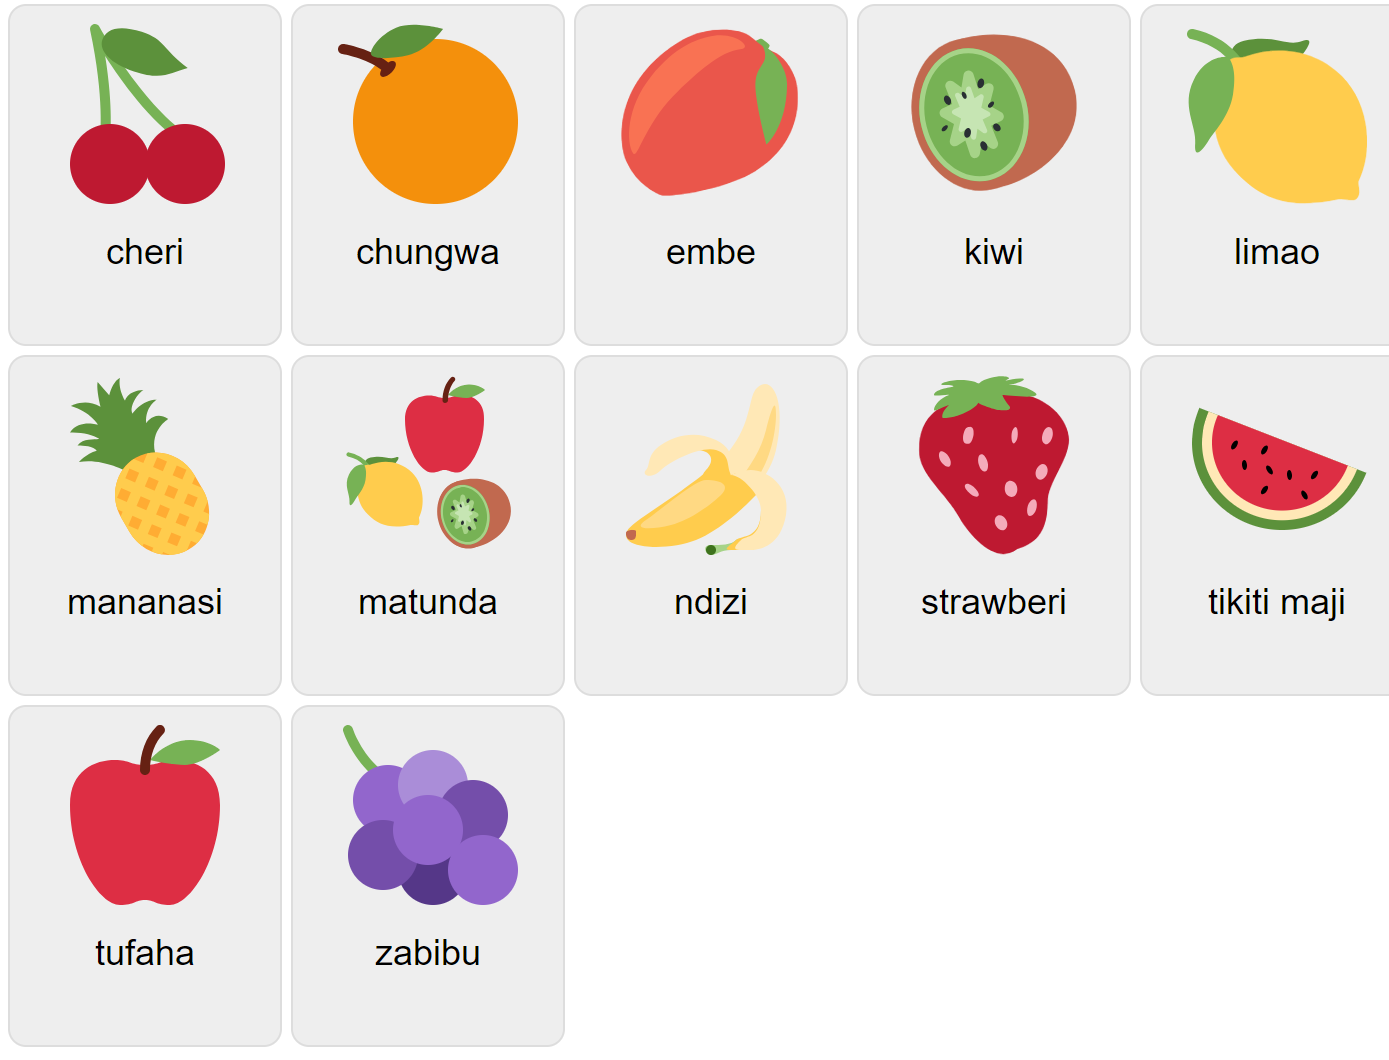 Frukt på swahili